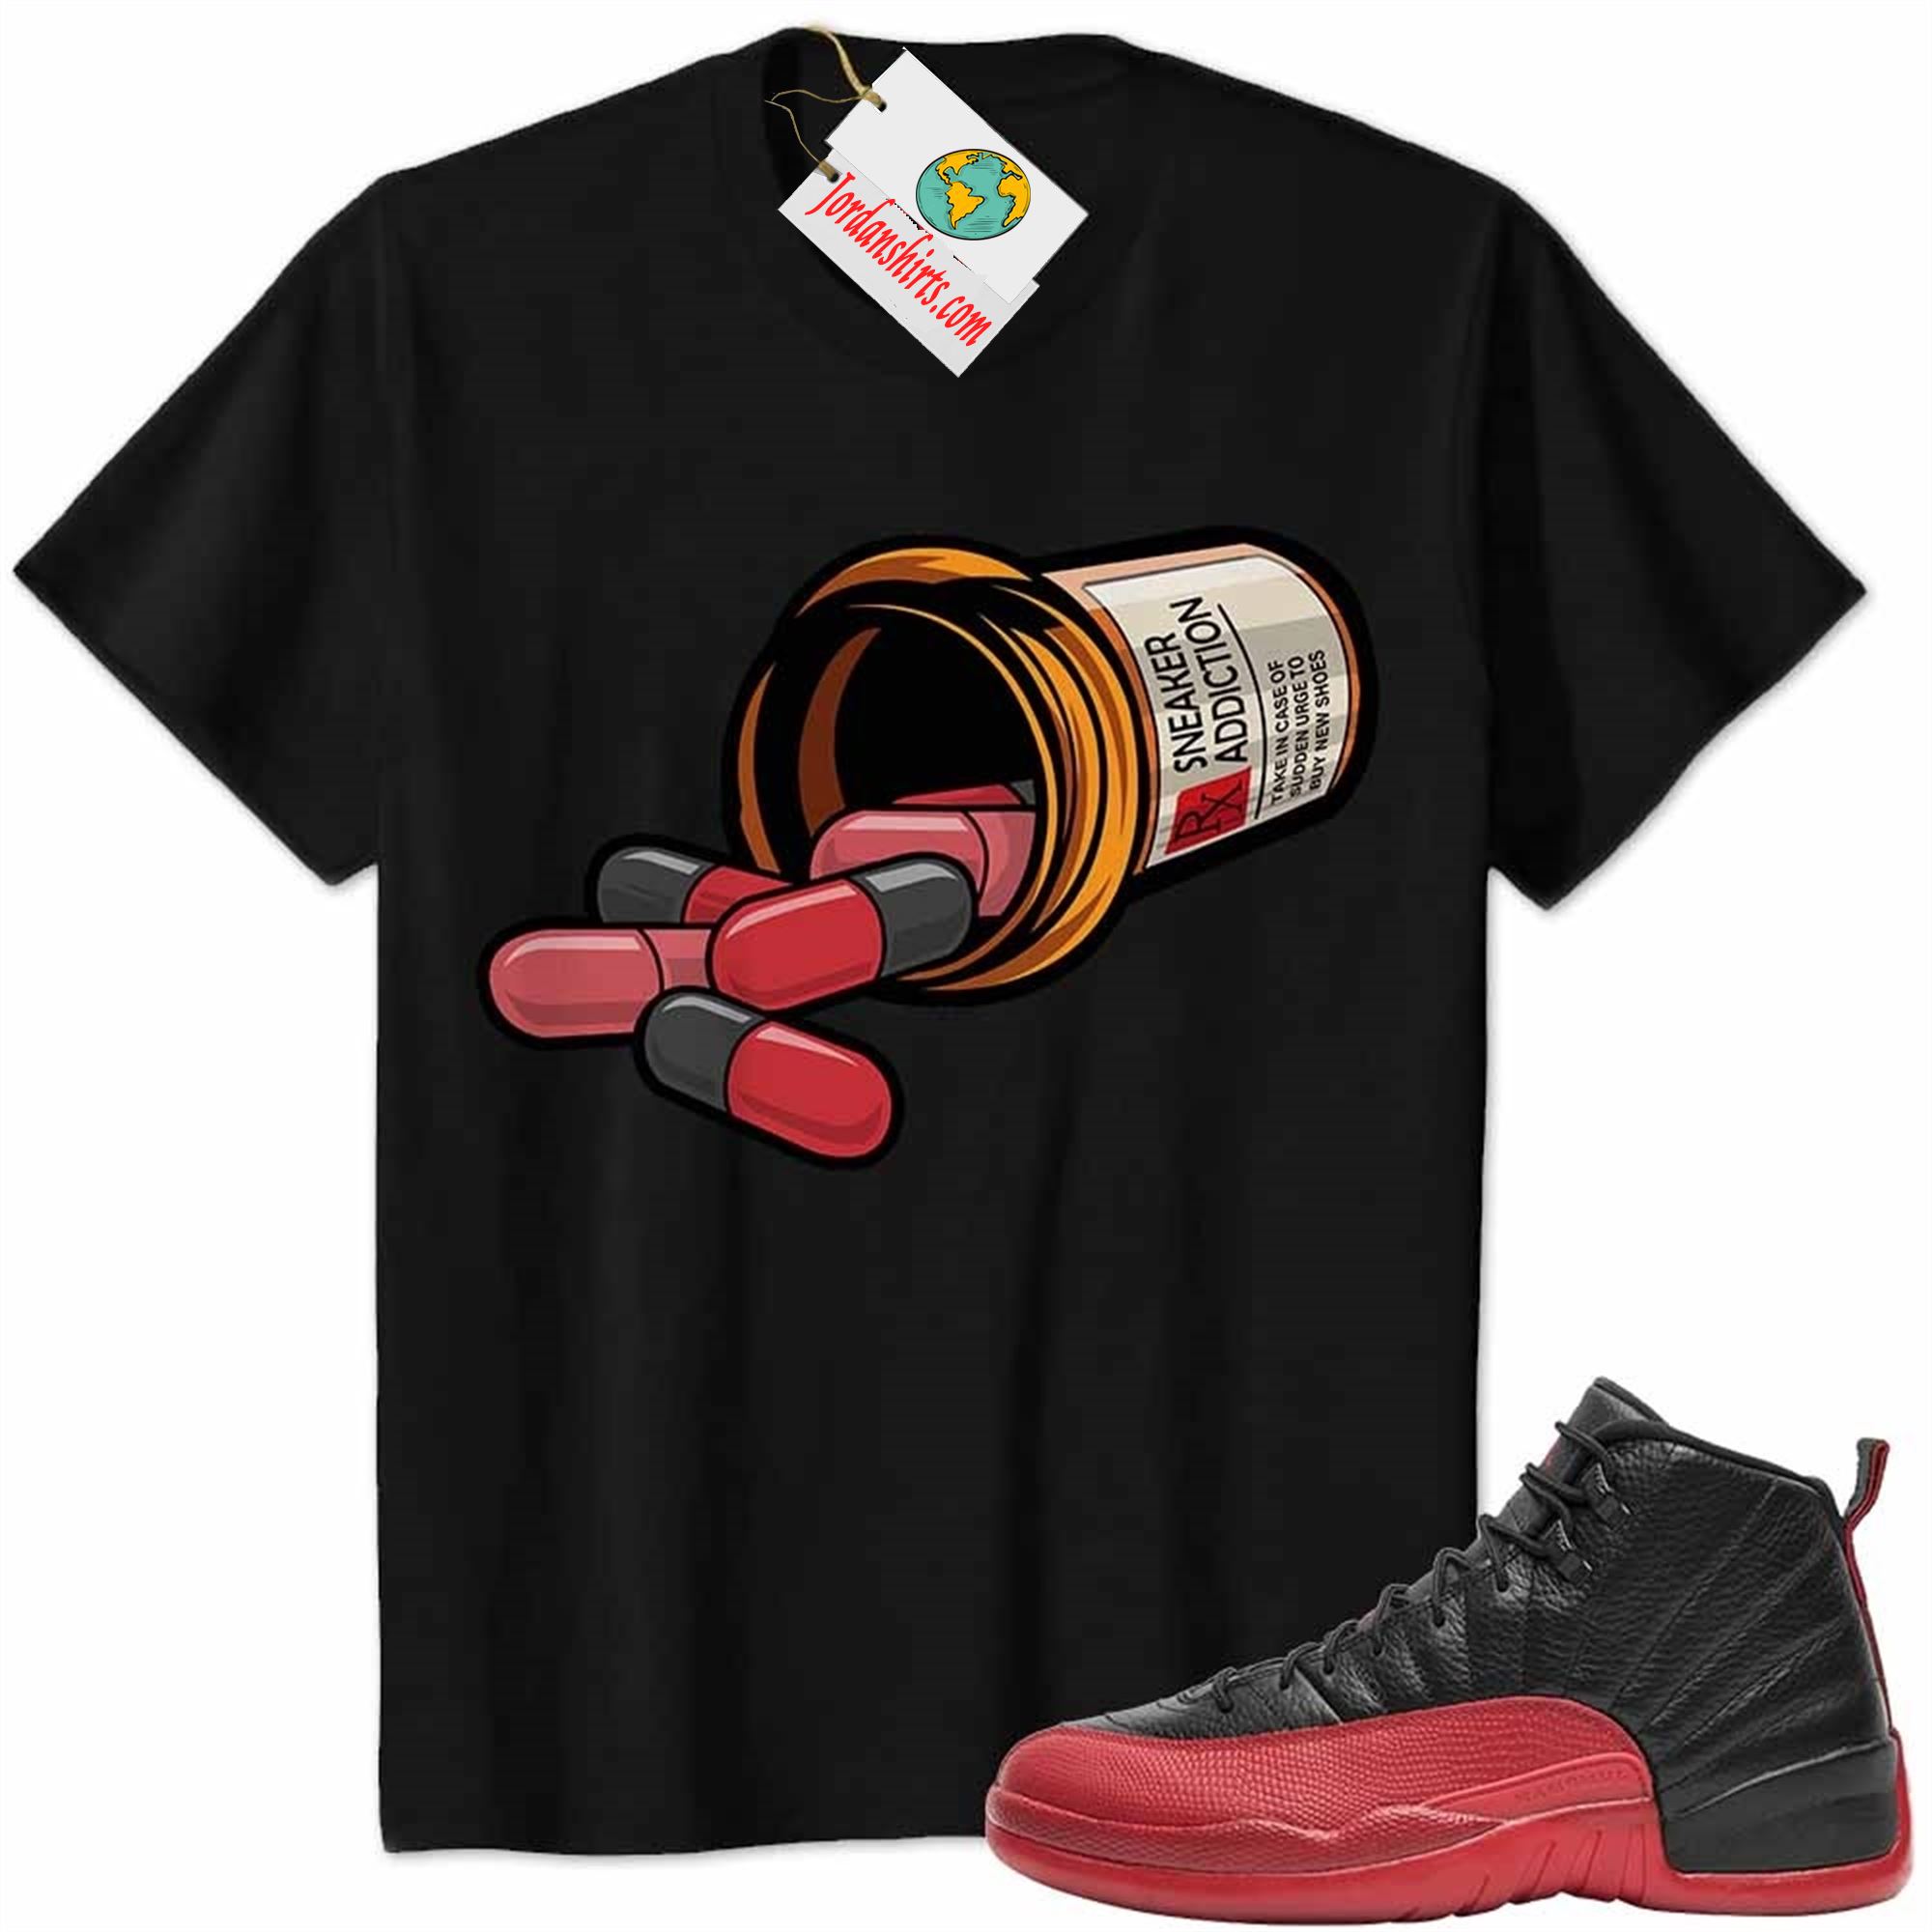 Jordan 12 Shirt, Rx Drugs Pill Bottle Sneaker Addiction Black Air Jordan 12 Flu Game 12s Plus Size Up To 5xl